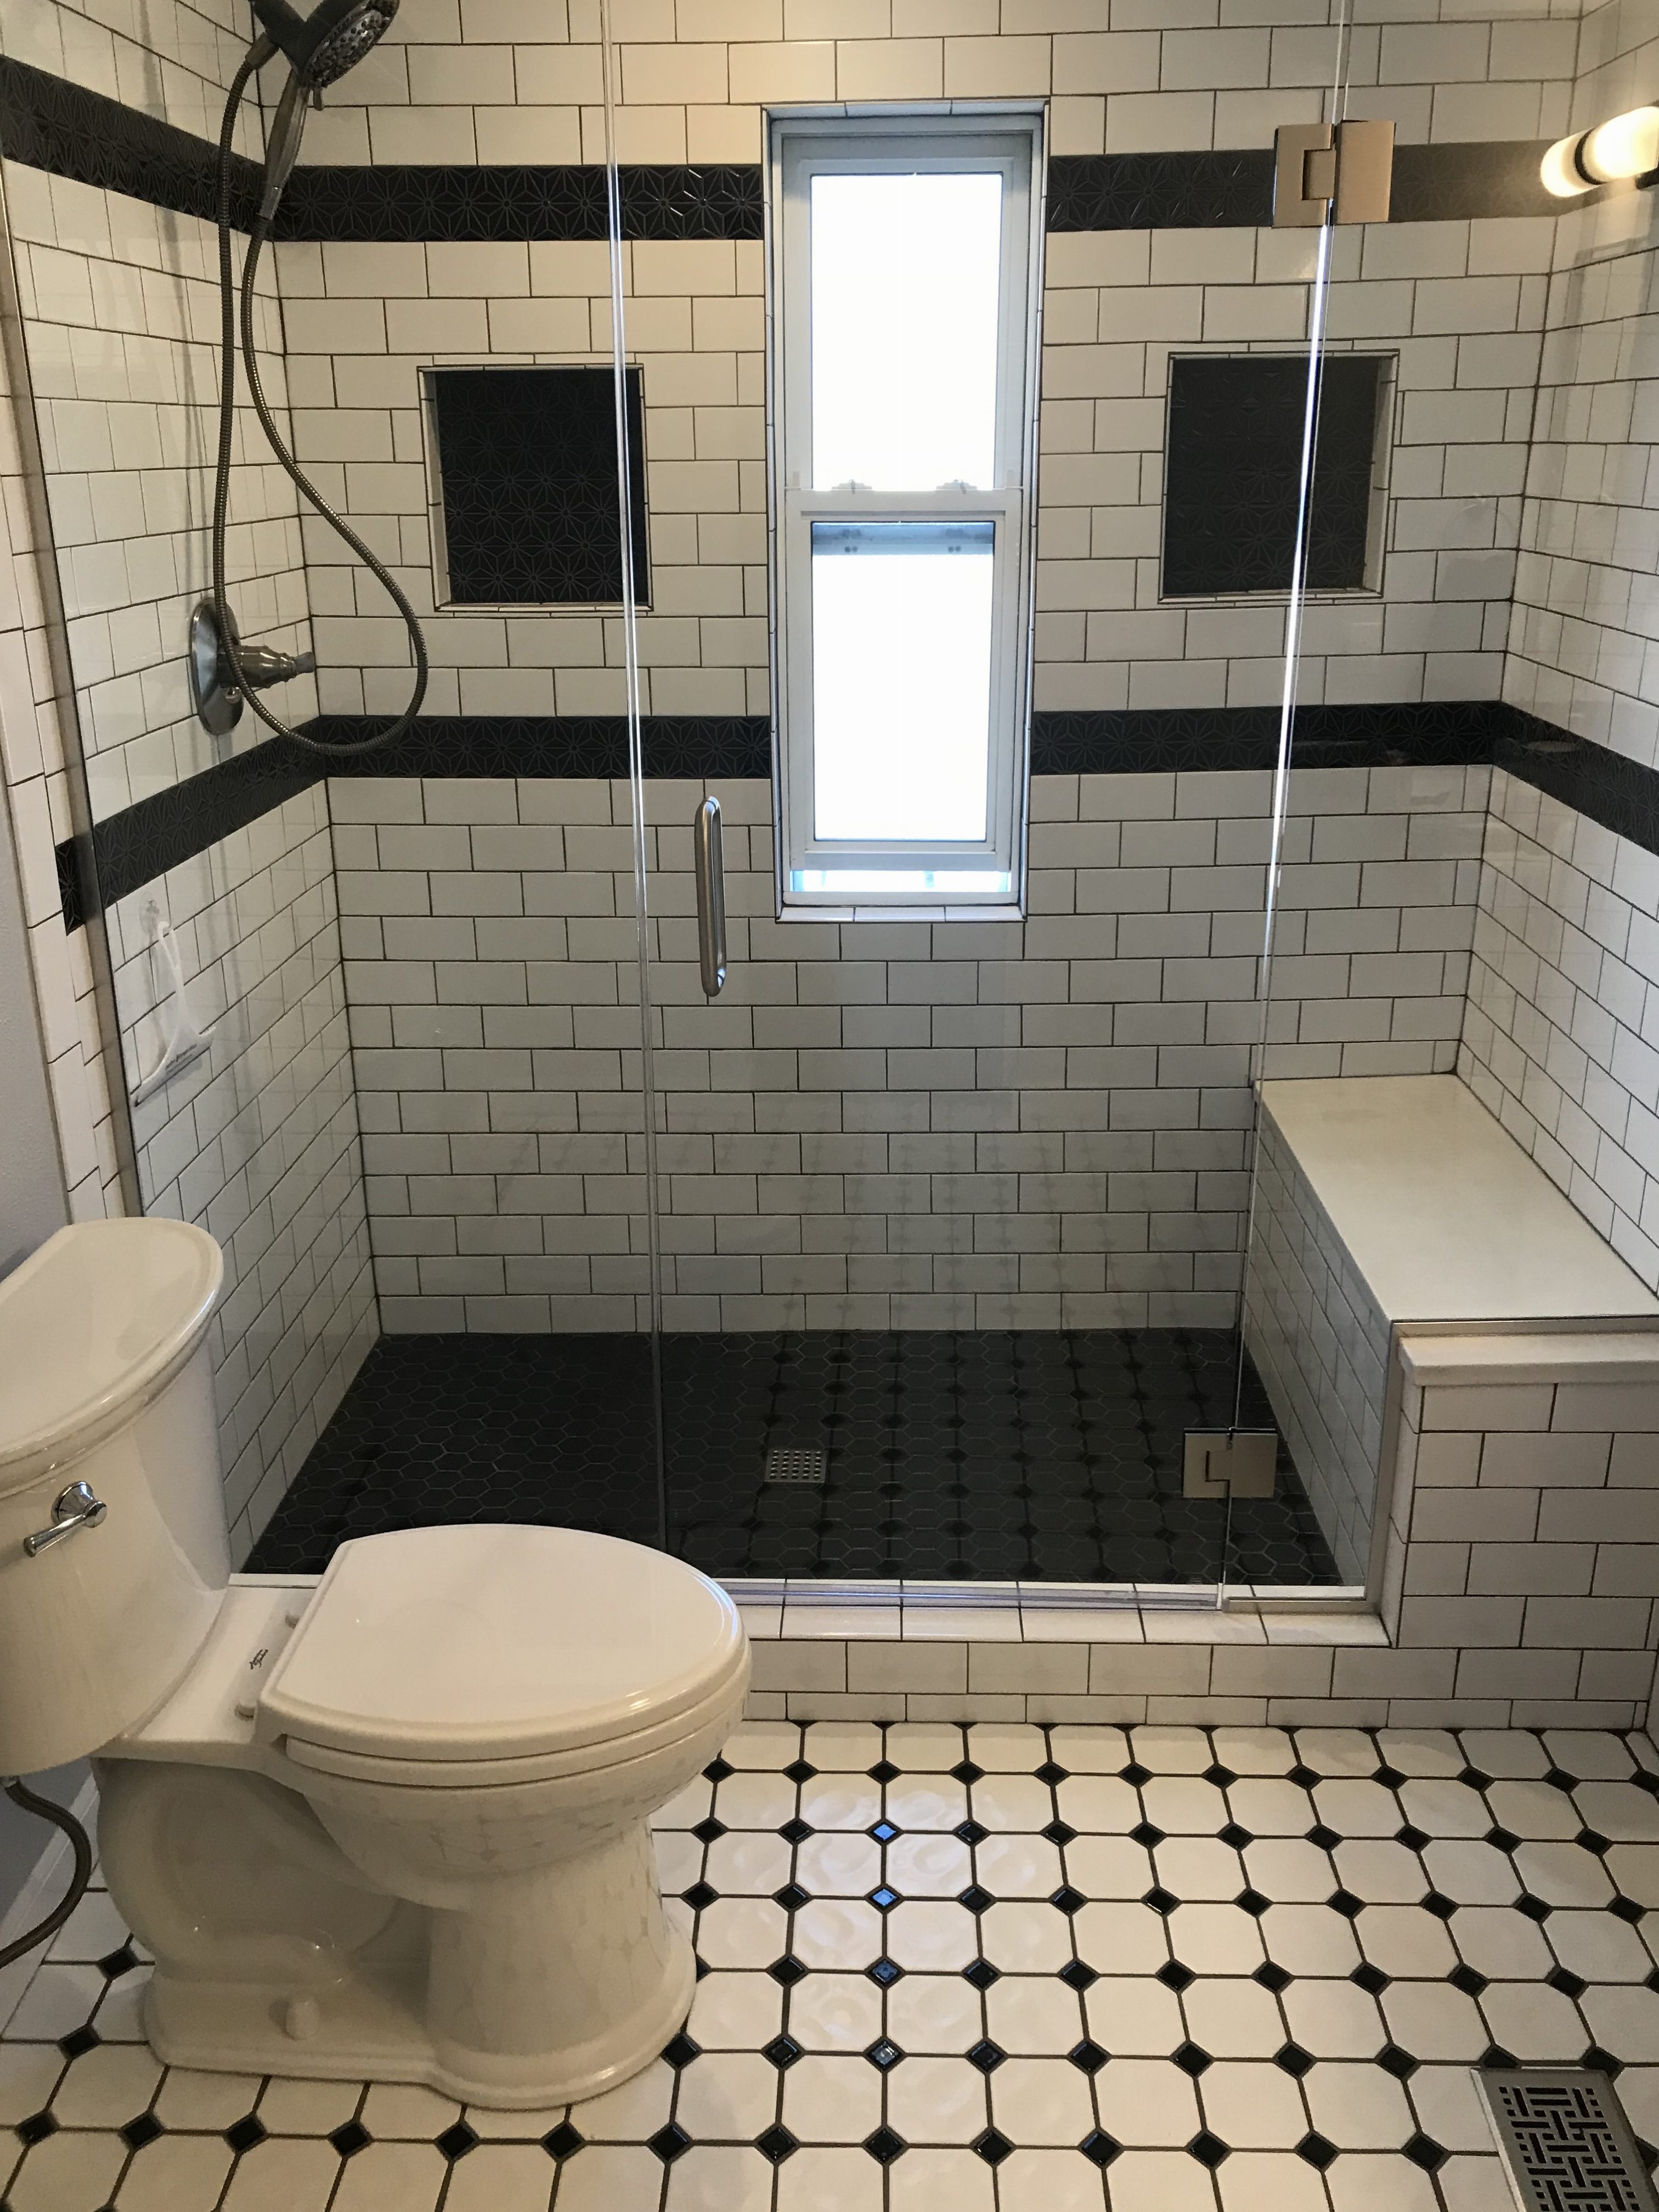 New Black &amp; White Bathrooms for Simple Design